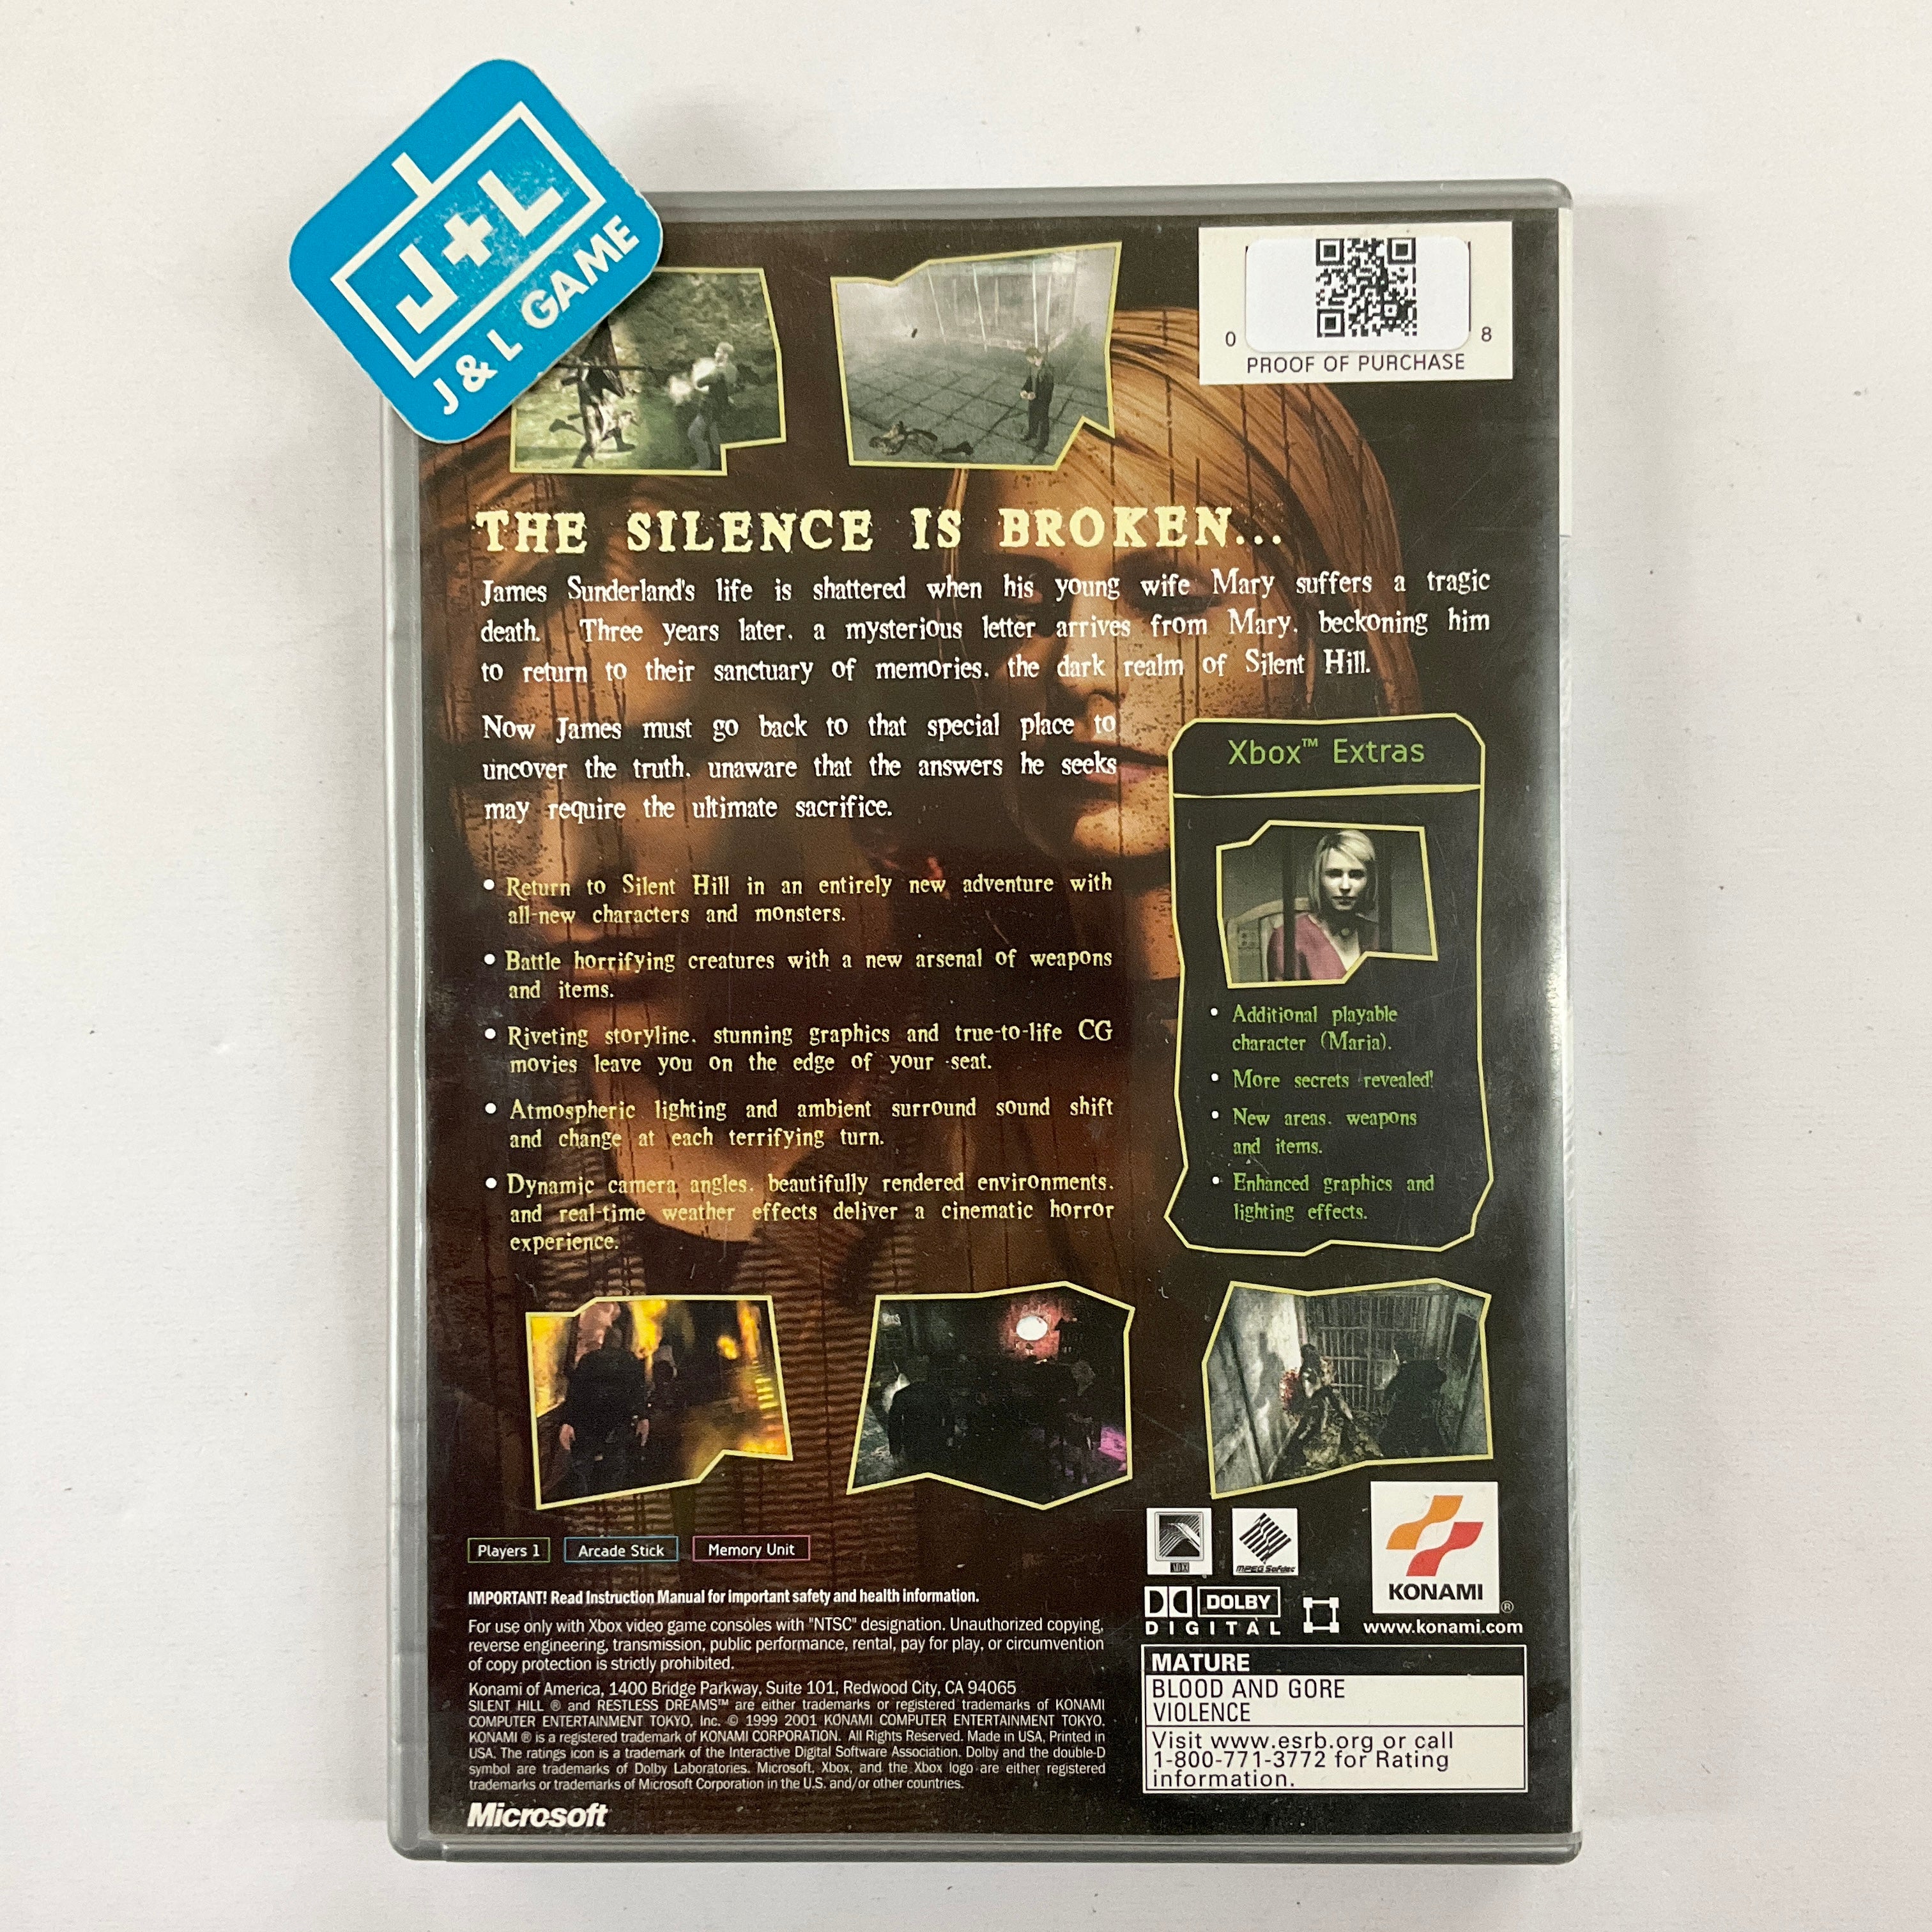 Silent Hill 2: Restless Dreams (Platinum Hits) - (XB) Xbox [Pre-Owned] Video Games Konami   